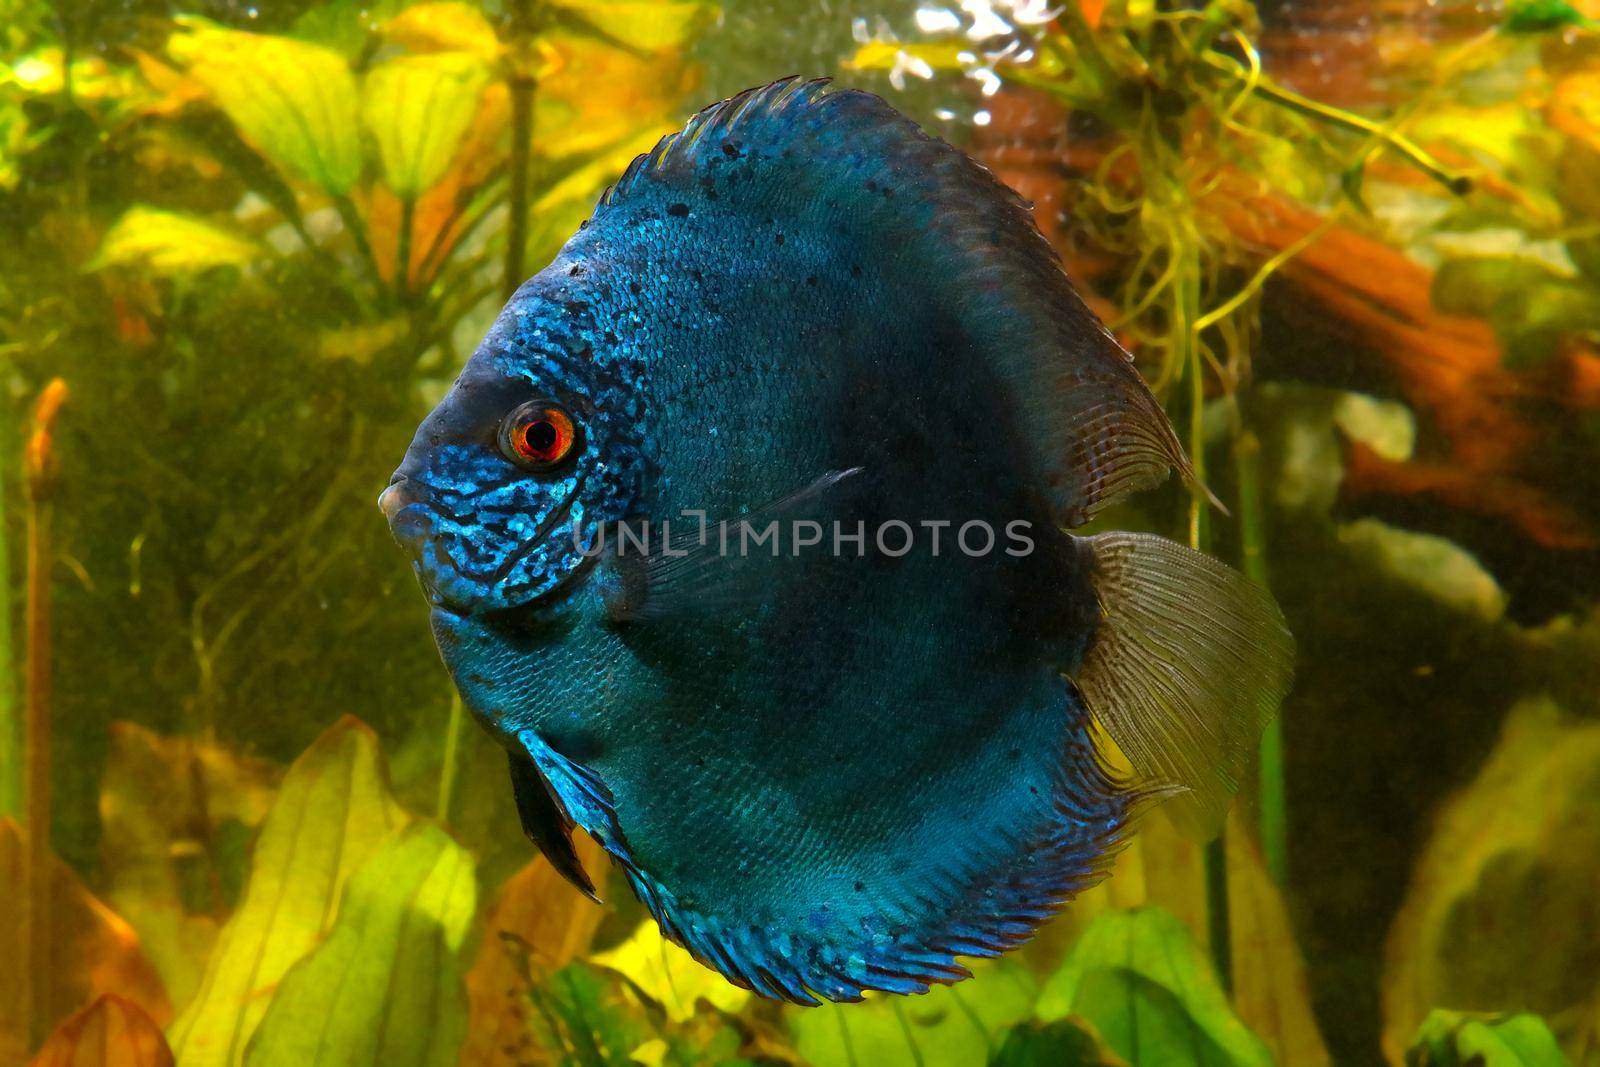 Blue discus fish in the aquarium. Popular as freshwater aquarium fish. by kip02kas